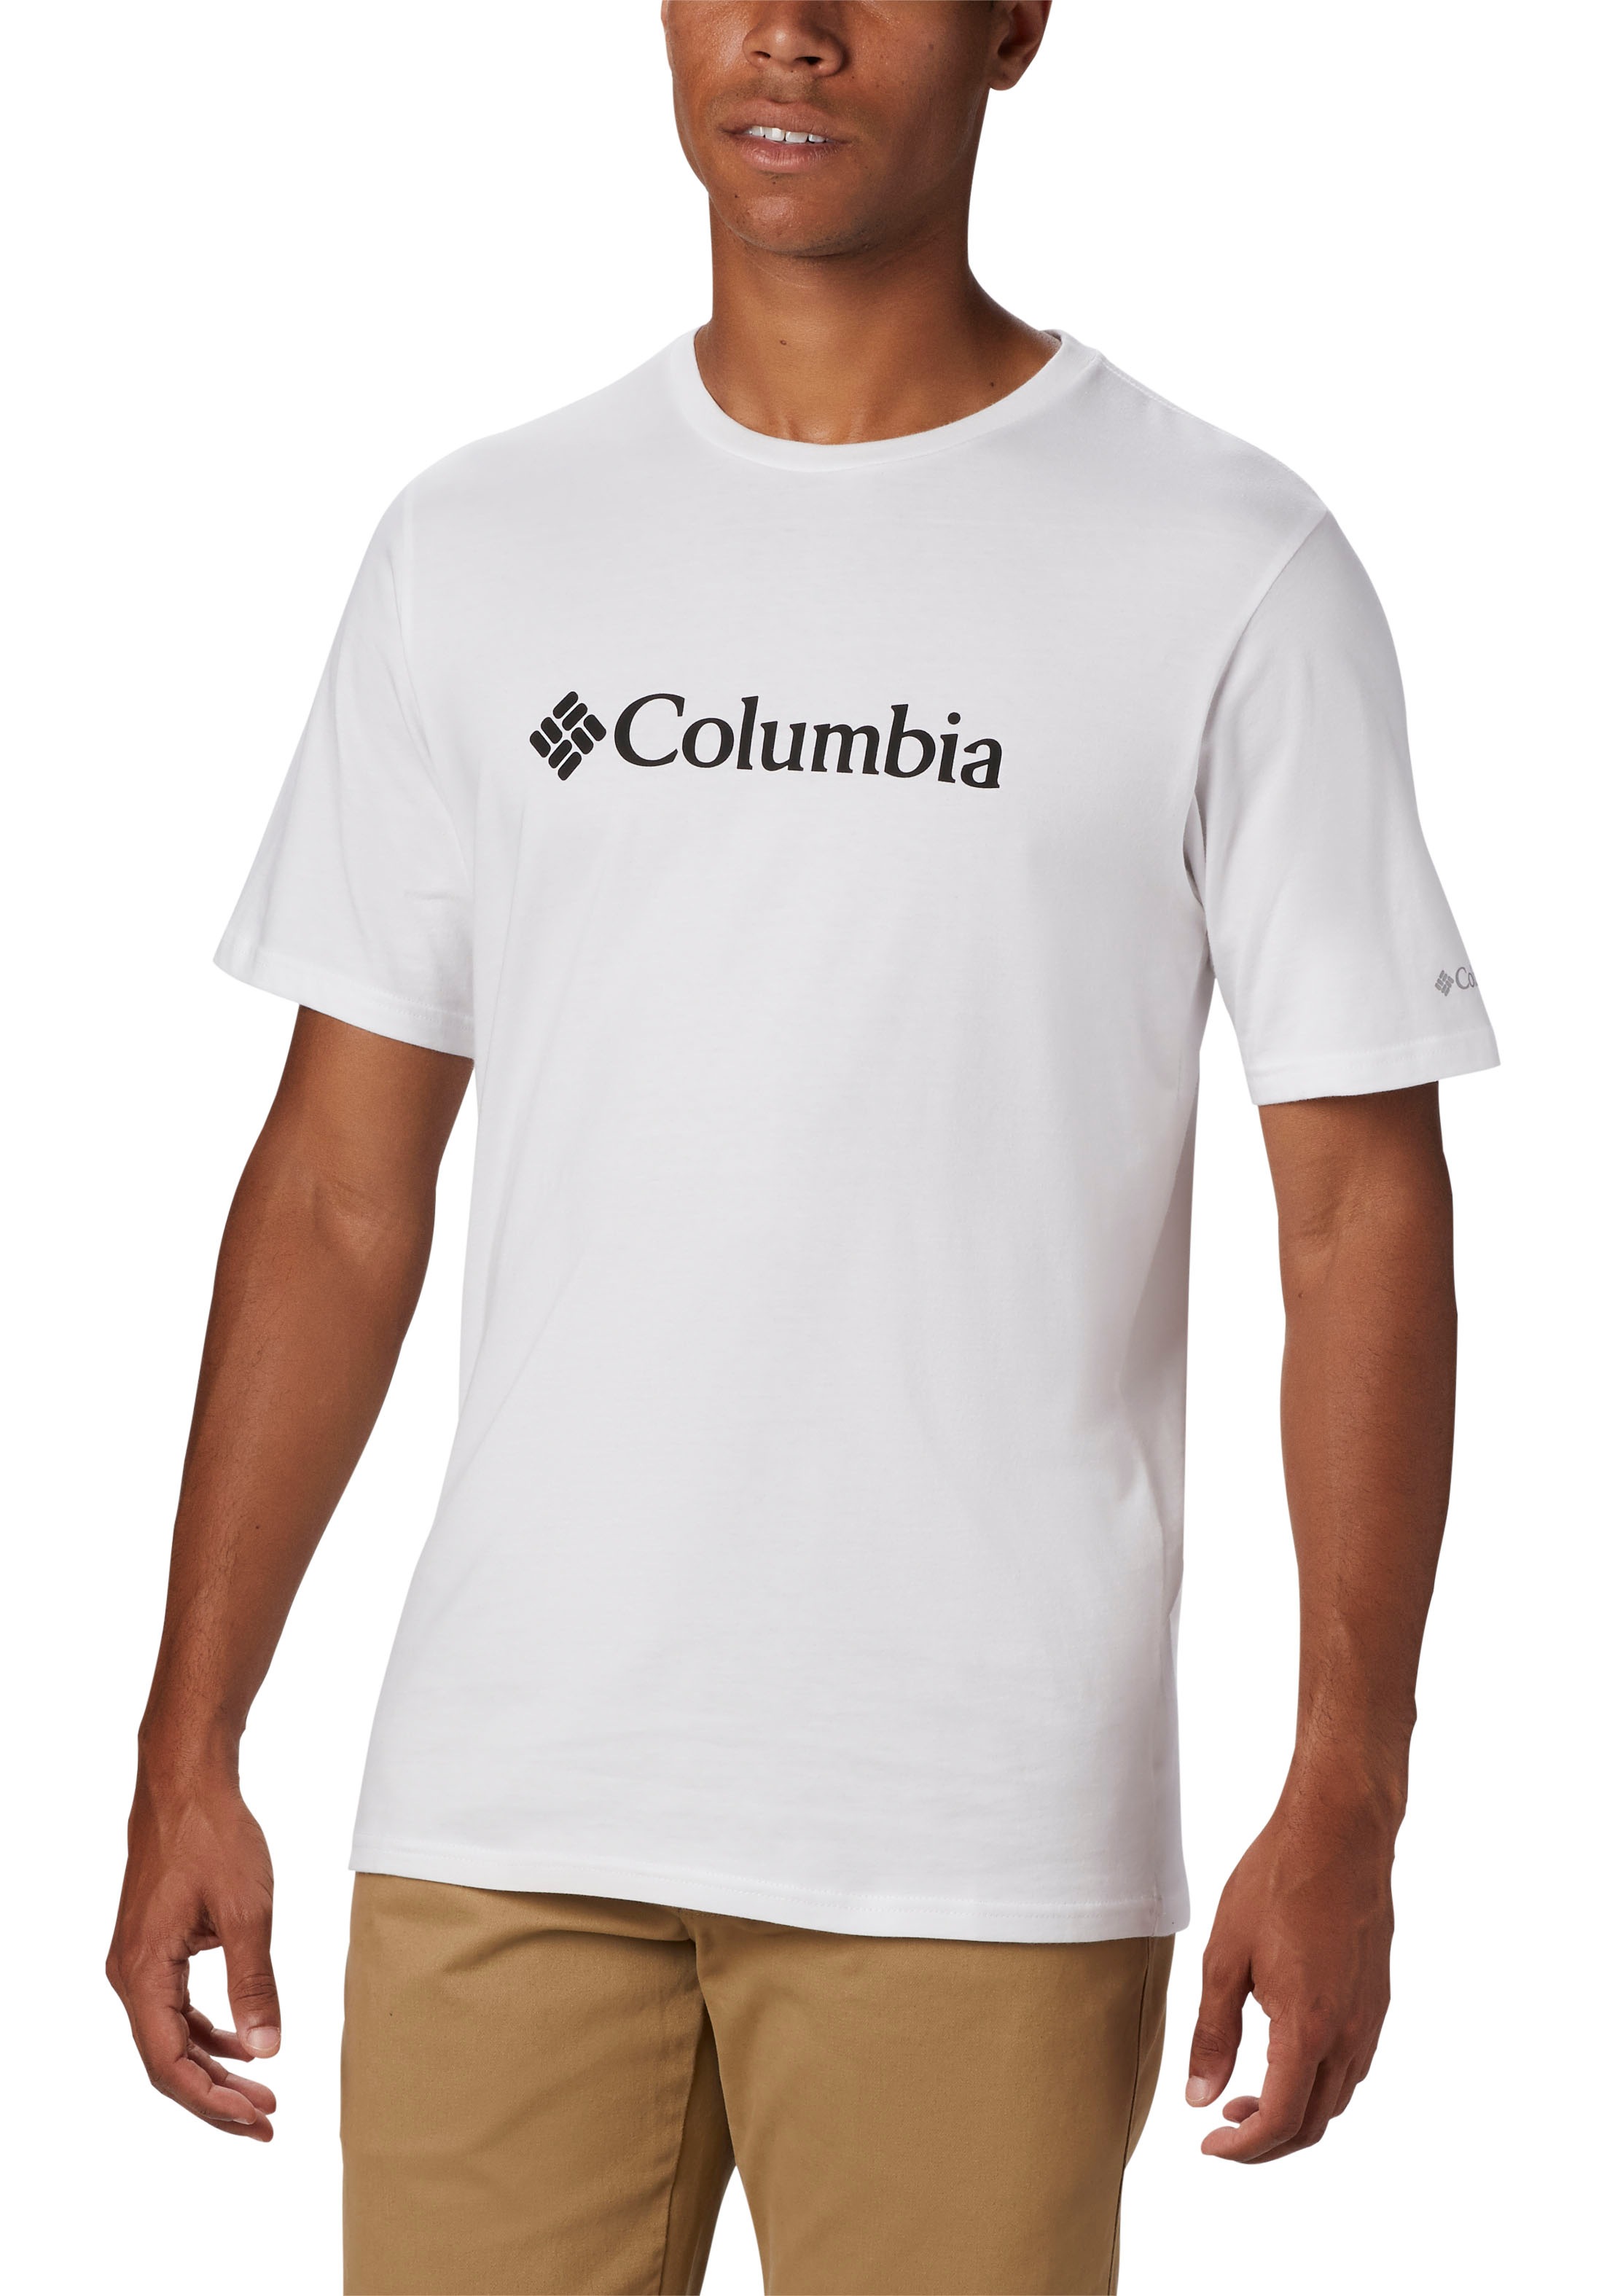 Columbia T-Shirt "CSC"